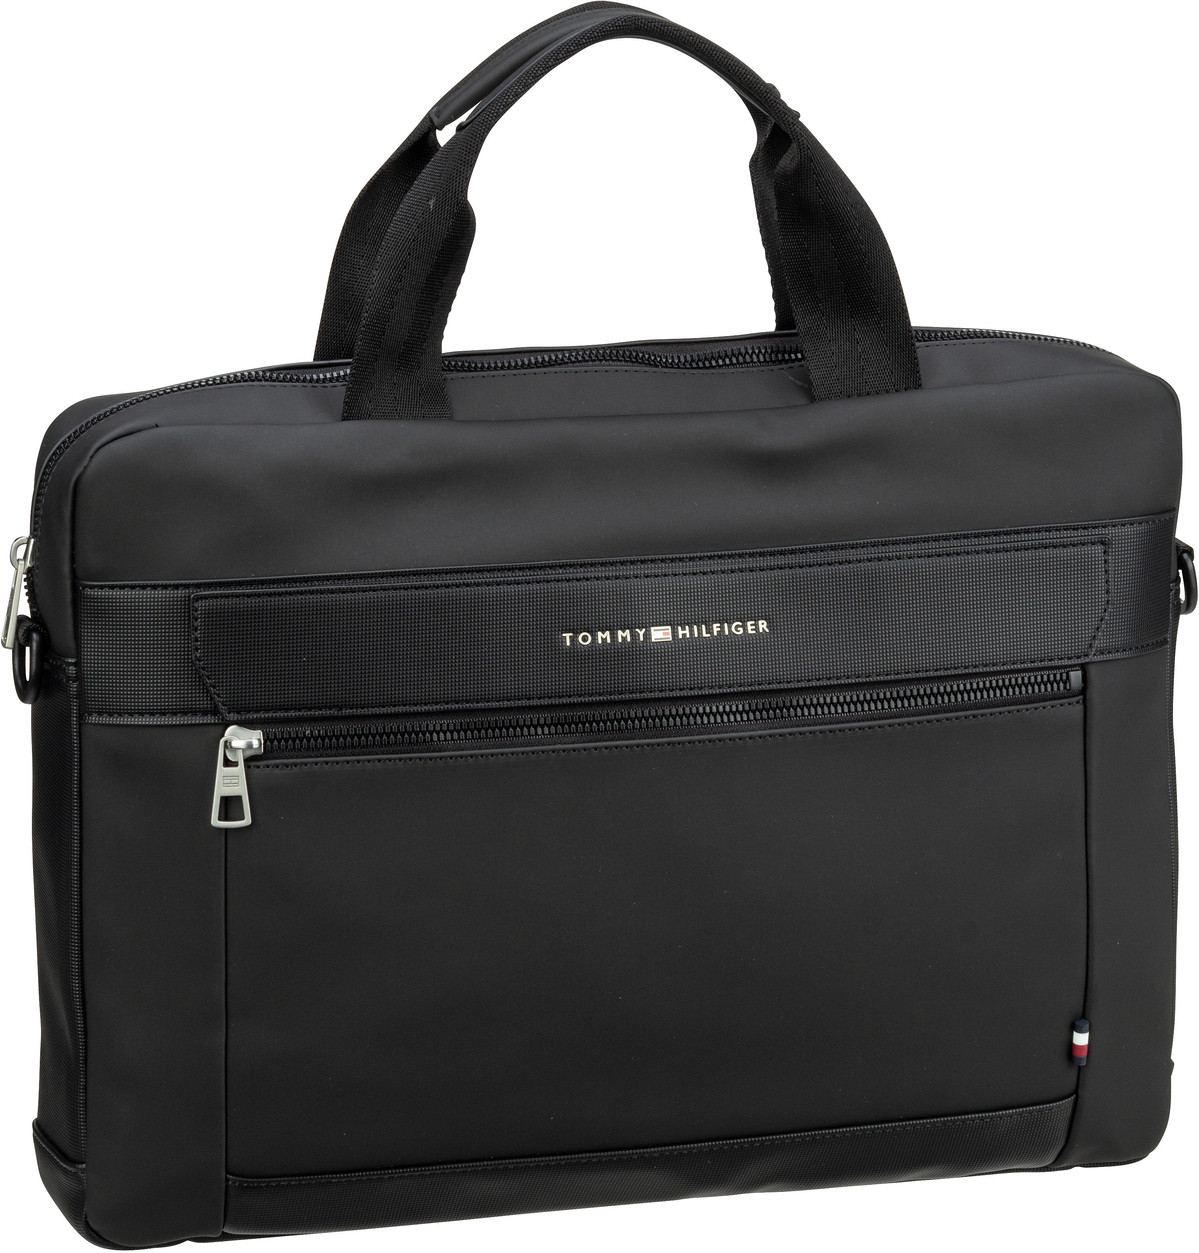 Tommy Hilfiger TH Casual Slim Computer Bag PSP23 - Black